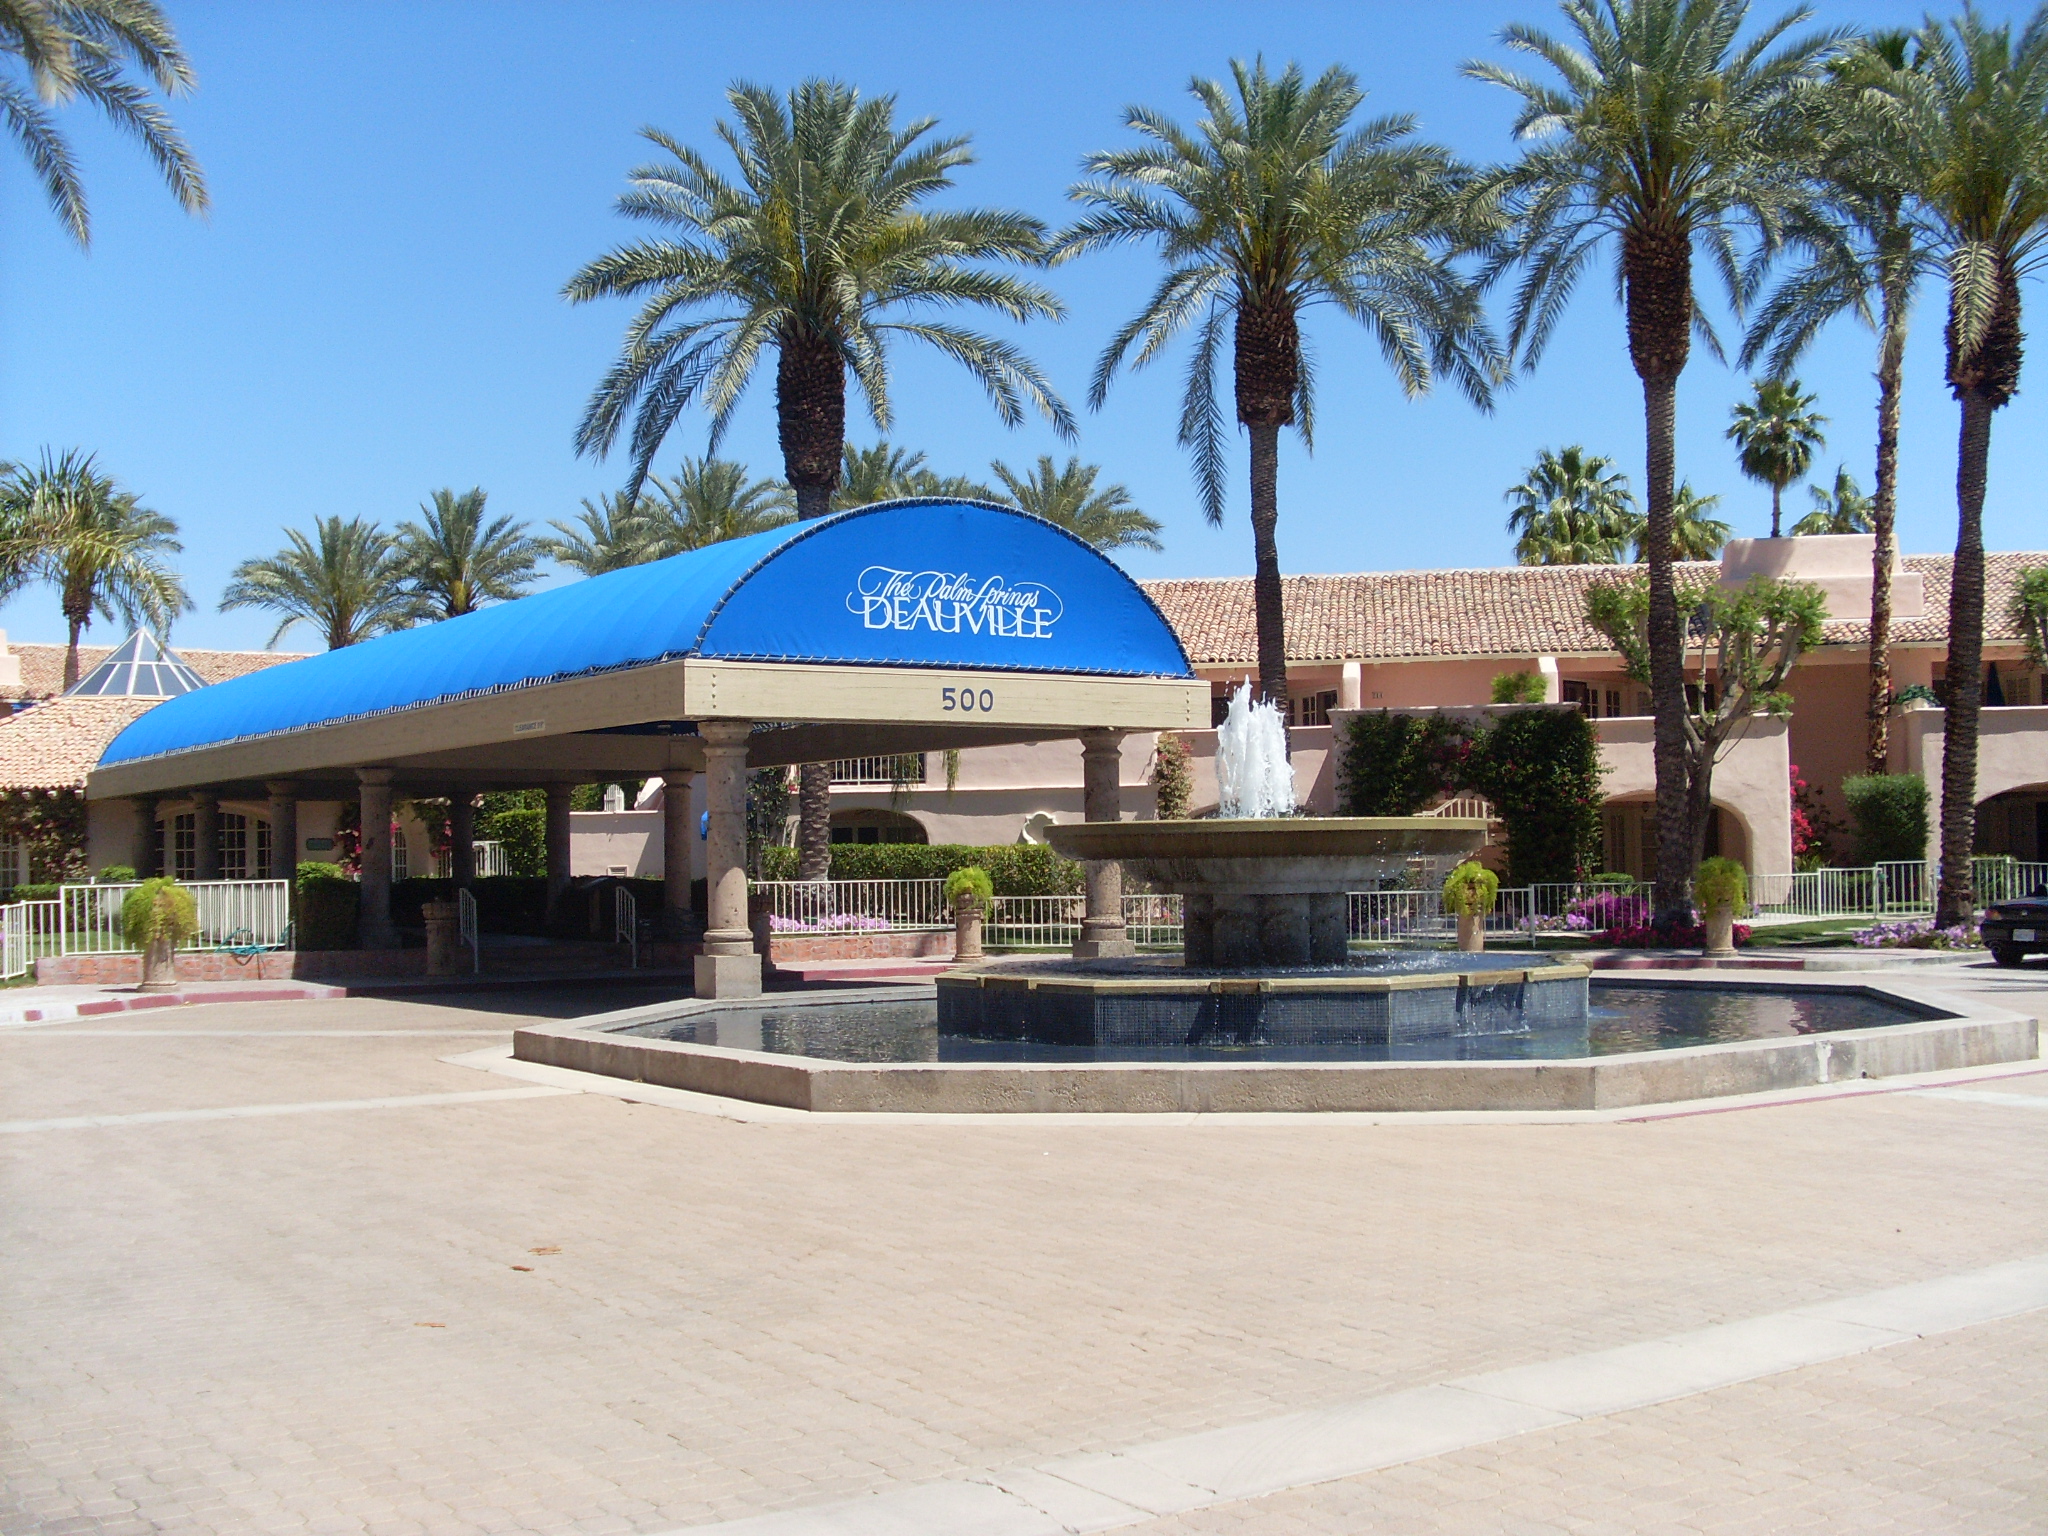 Main Gate, Deauville, Palm Springs, California